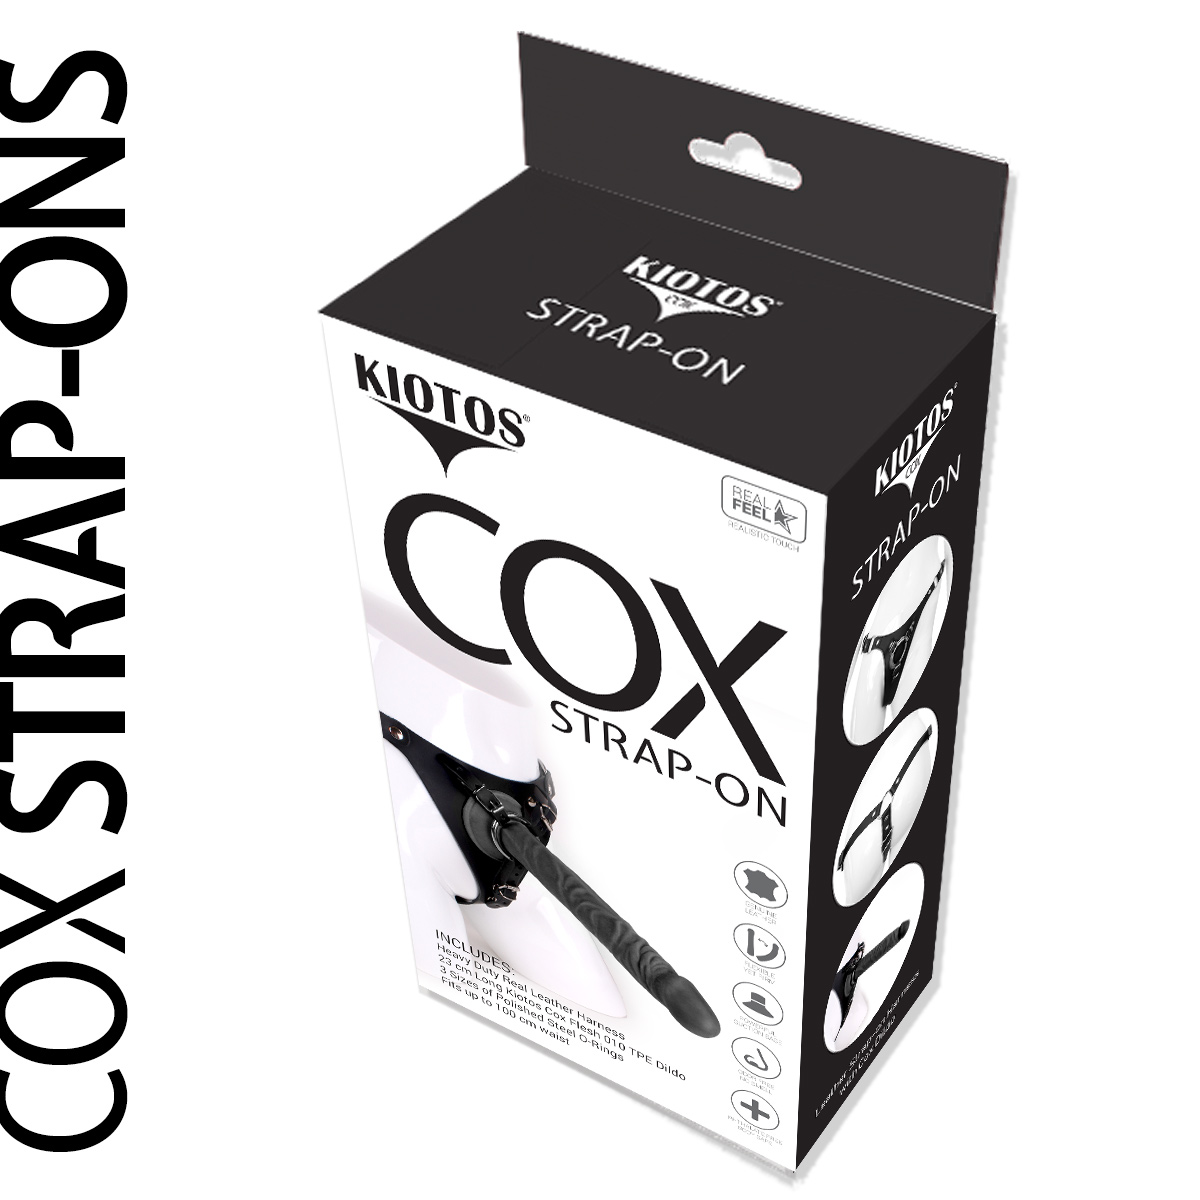 Kiotos-COX-Strap-On-Dildo-Black-010-OPR-307907-4